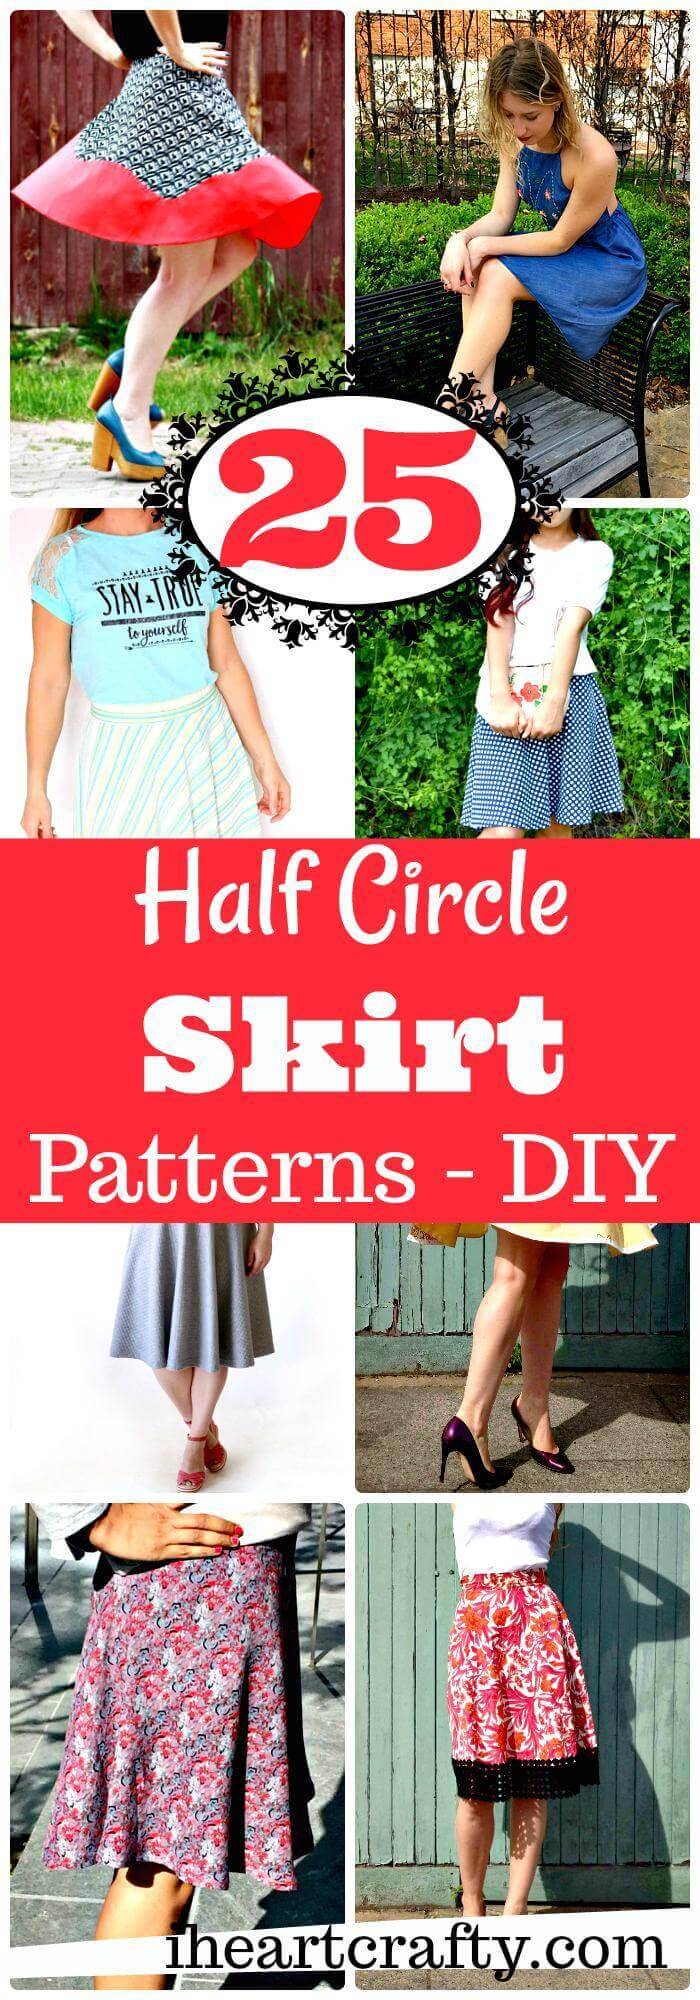 Half Circle Skirt